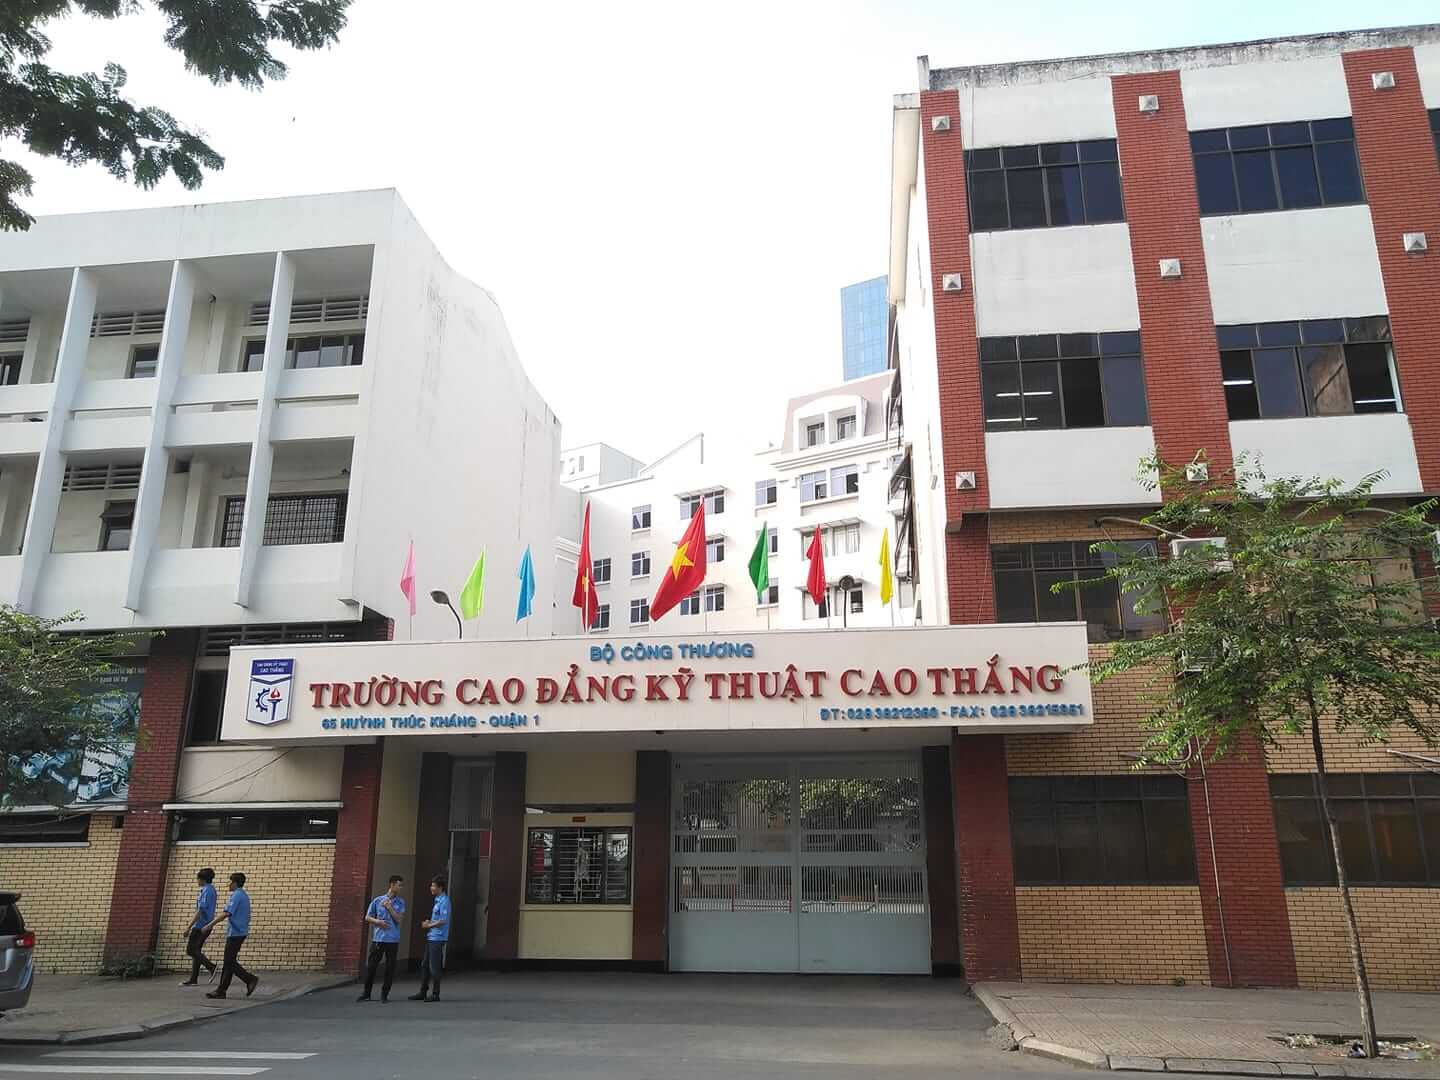 Cao Thang Technical College - Professional and prestigious auto repair training